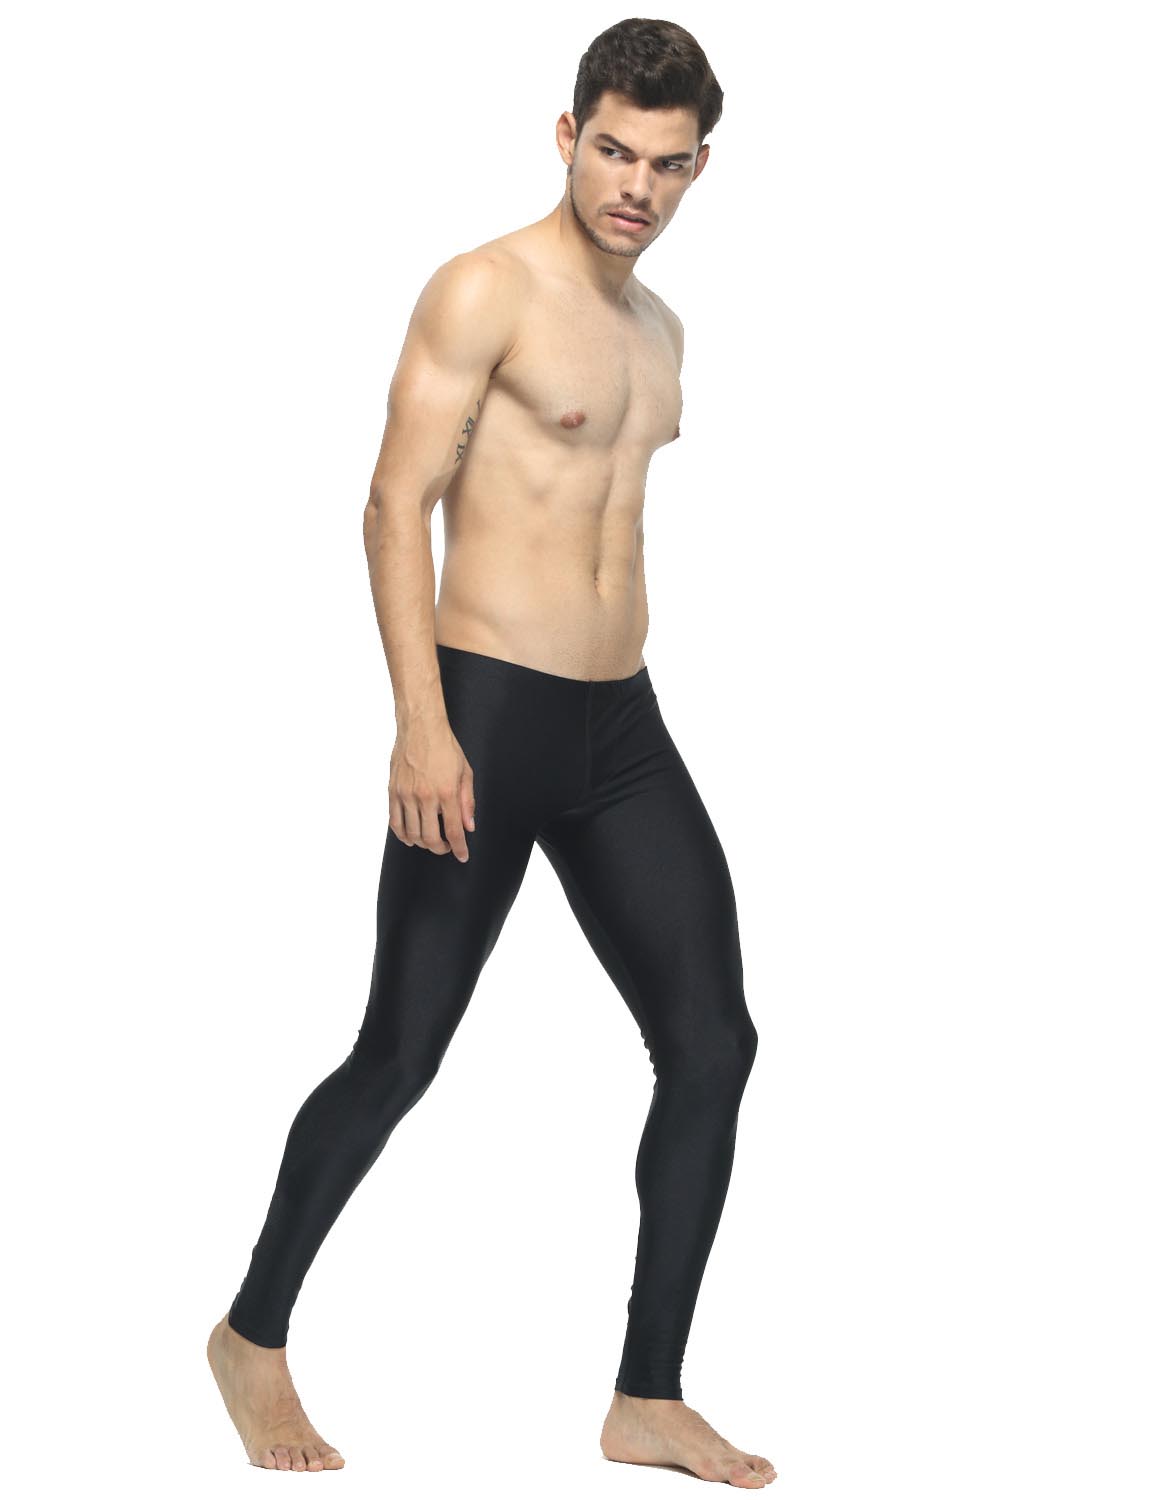 Pantyhose Shiny high waist Tights Sexy Stockings yoga pants training women  sports leggings fitness - AliExpress